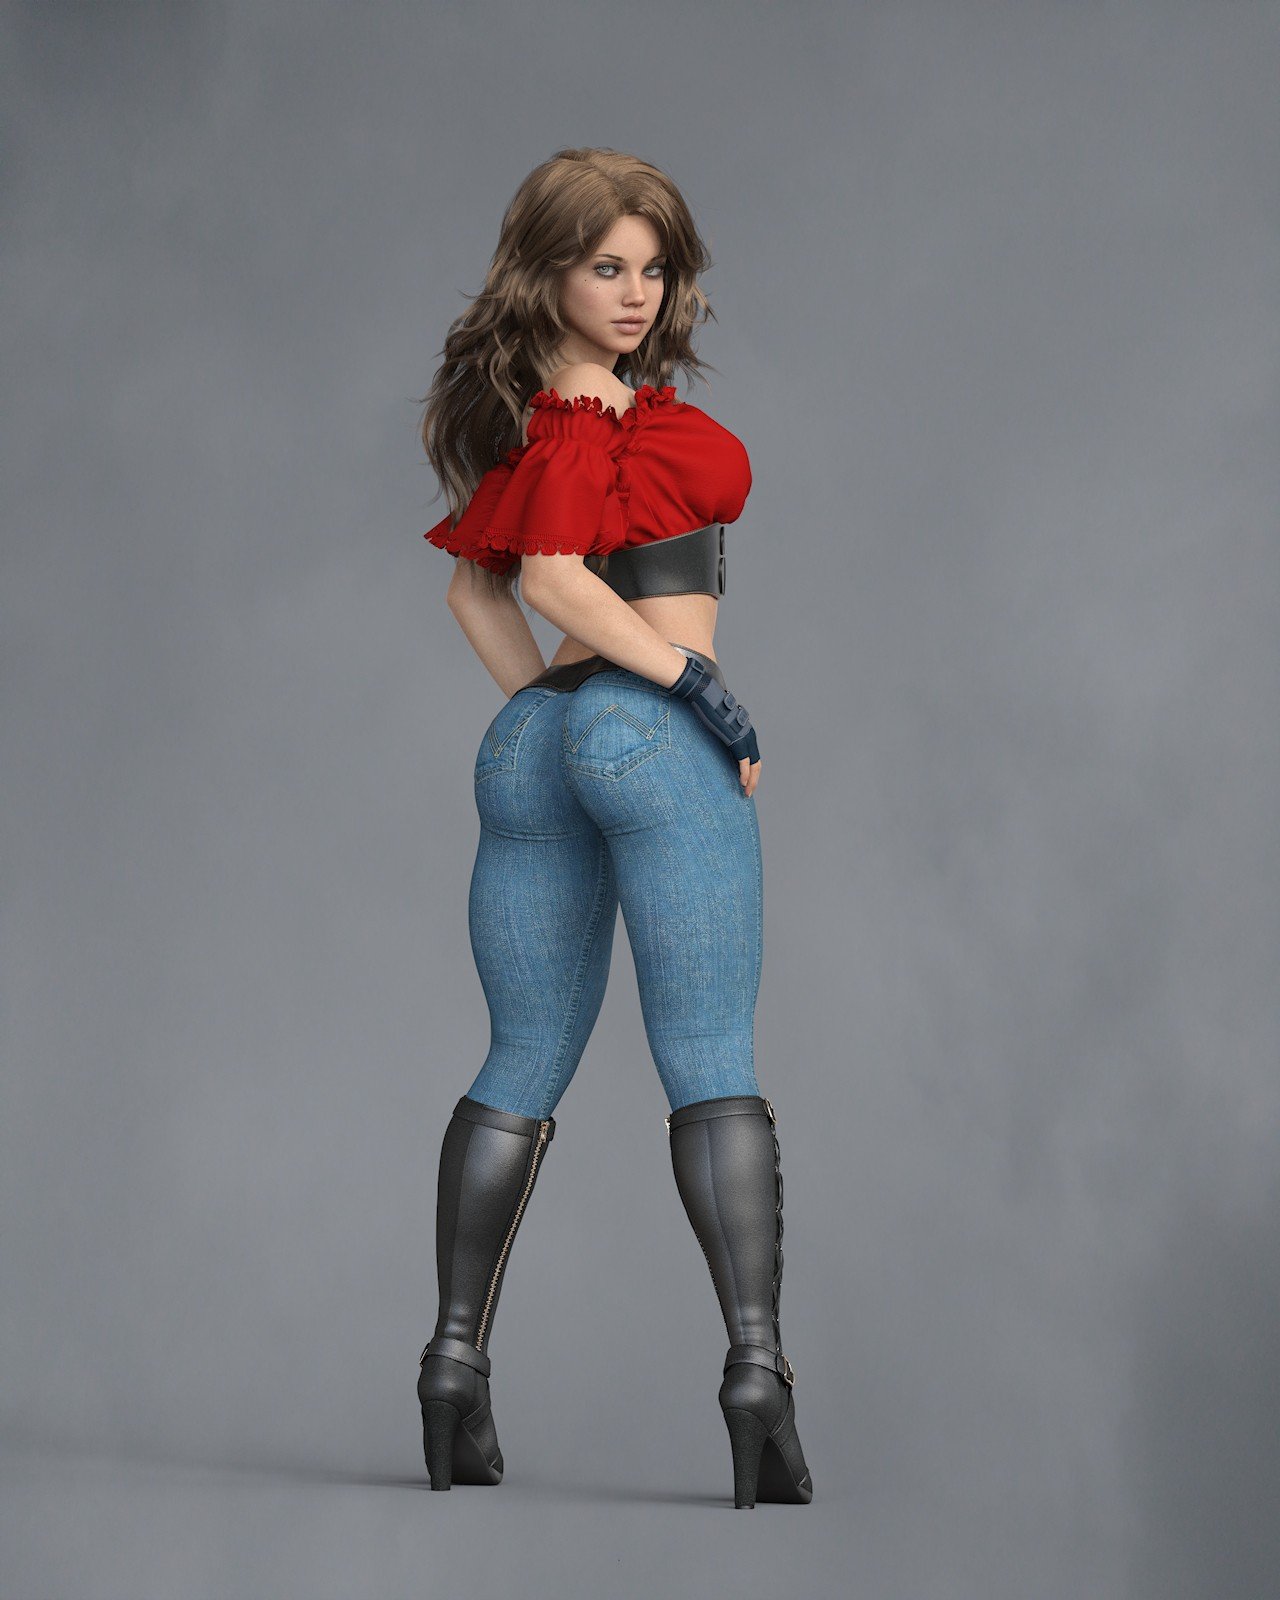 KrashWerks REYNA for Genesis 8 Female by: KrashWerks, 3D Models by Daz 3D